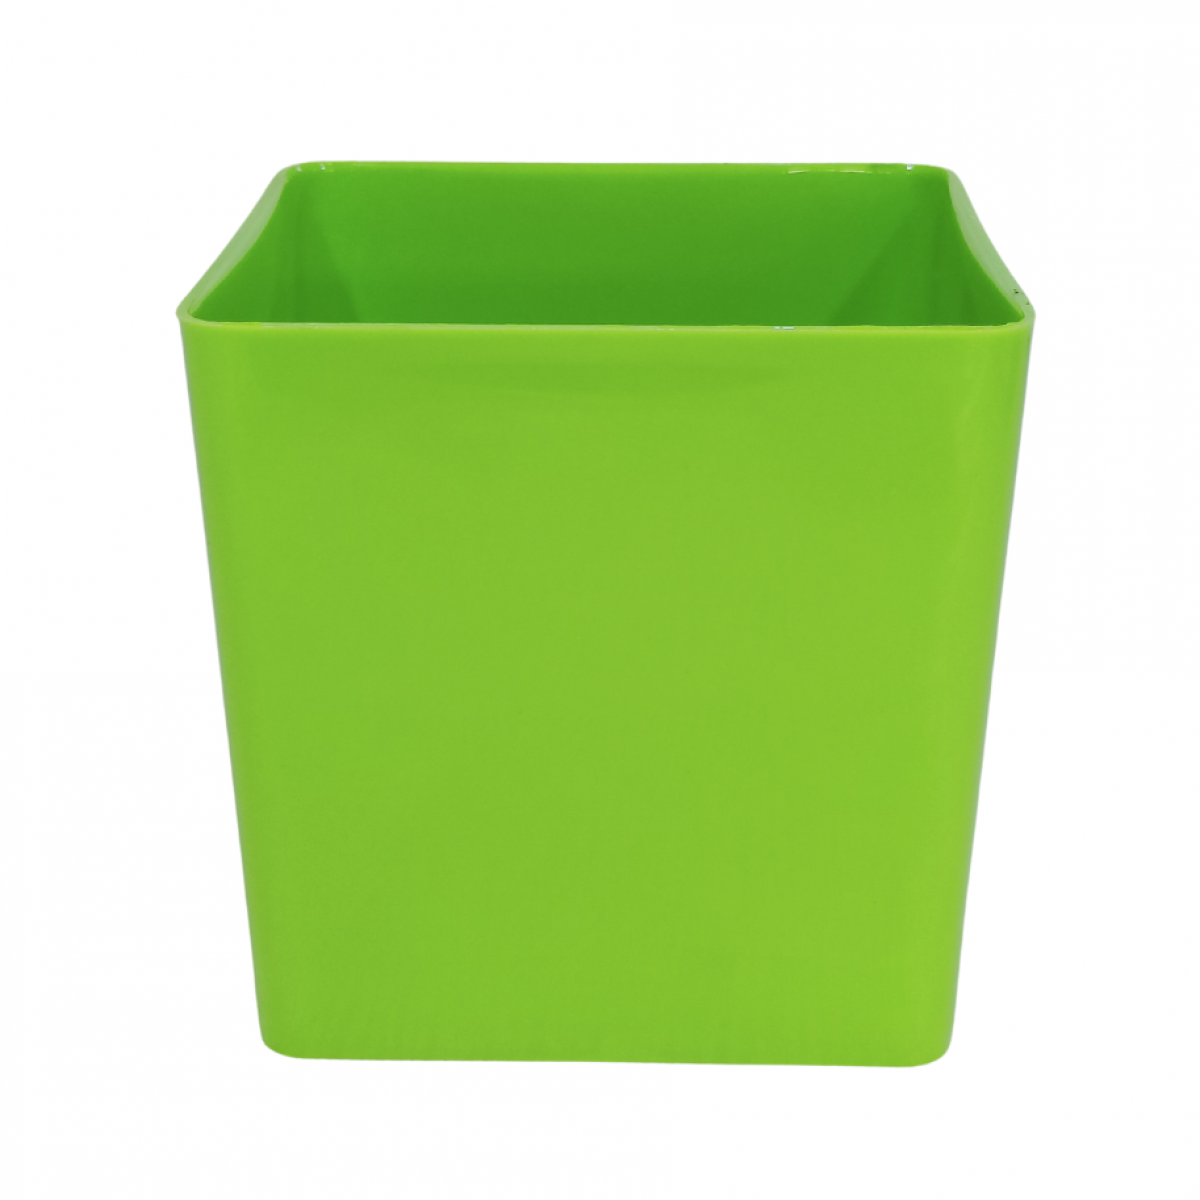 5153 Cube Lime Green 13x13x13cm Acrylic Vase - 1 No